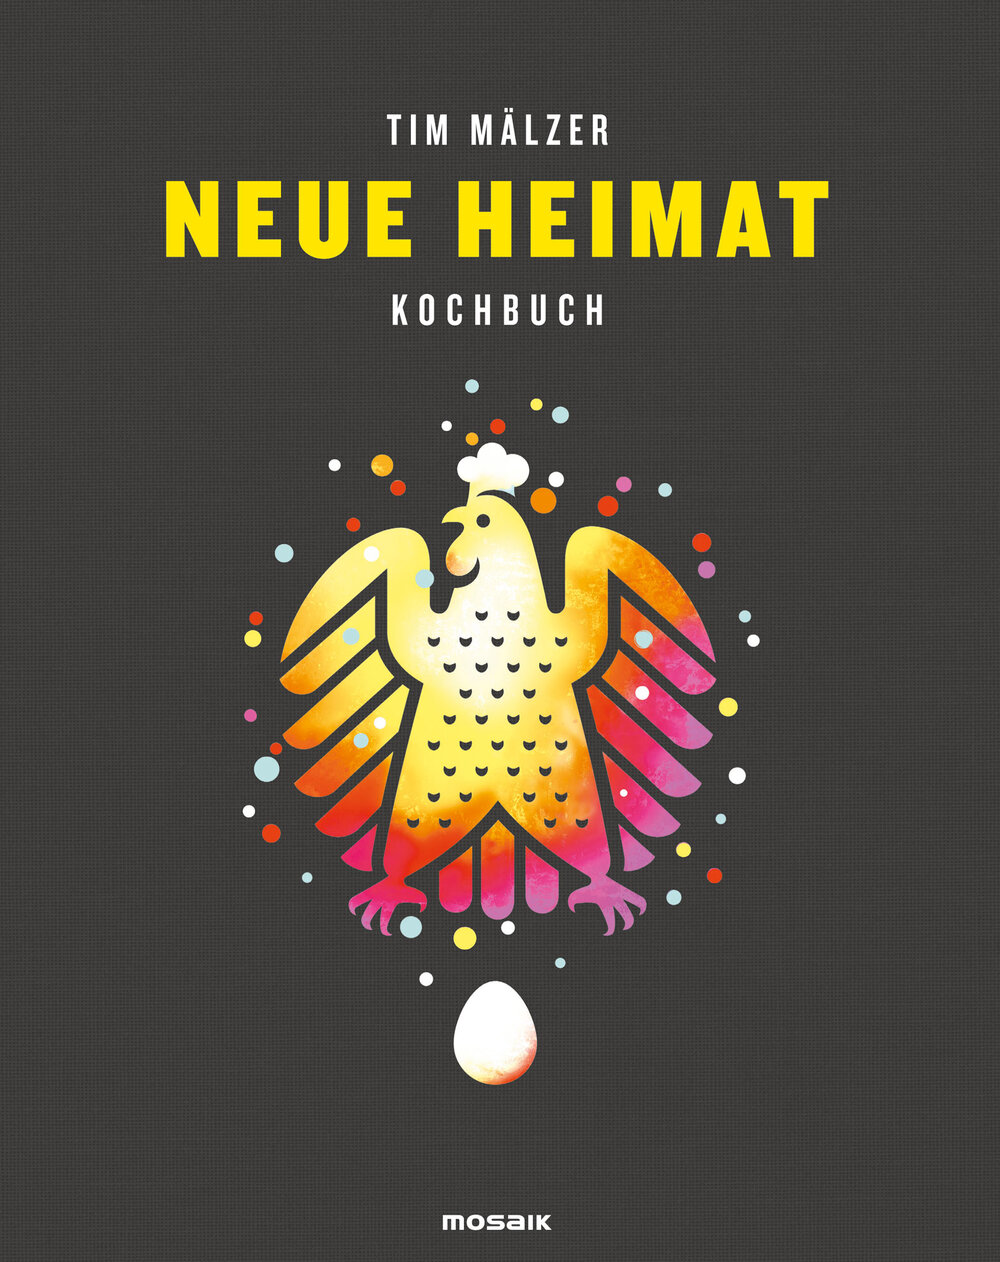 Kochbuch „Neue Heimat“ – Tim Mälzer